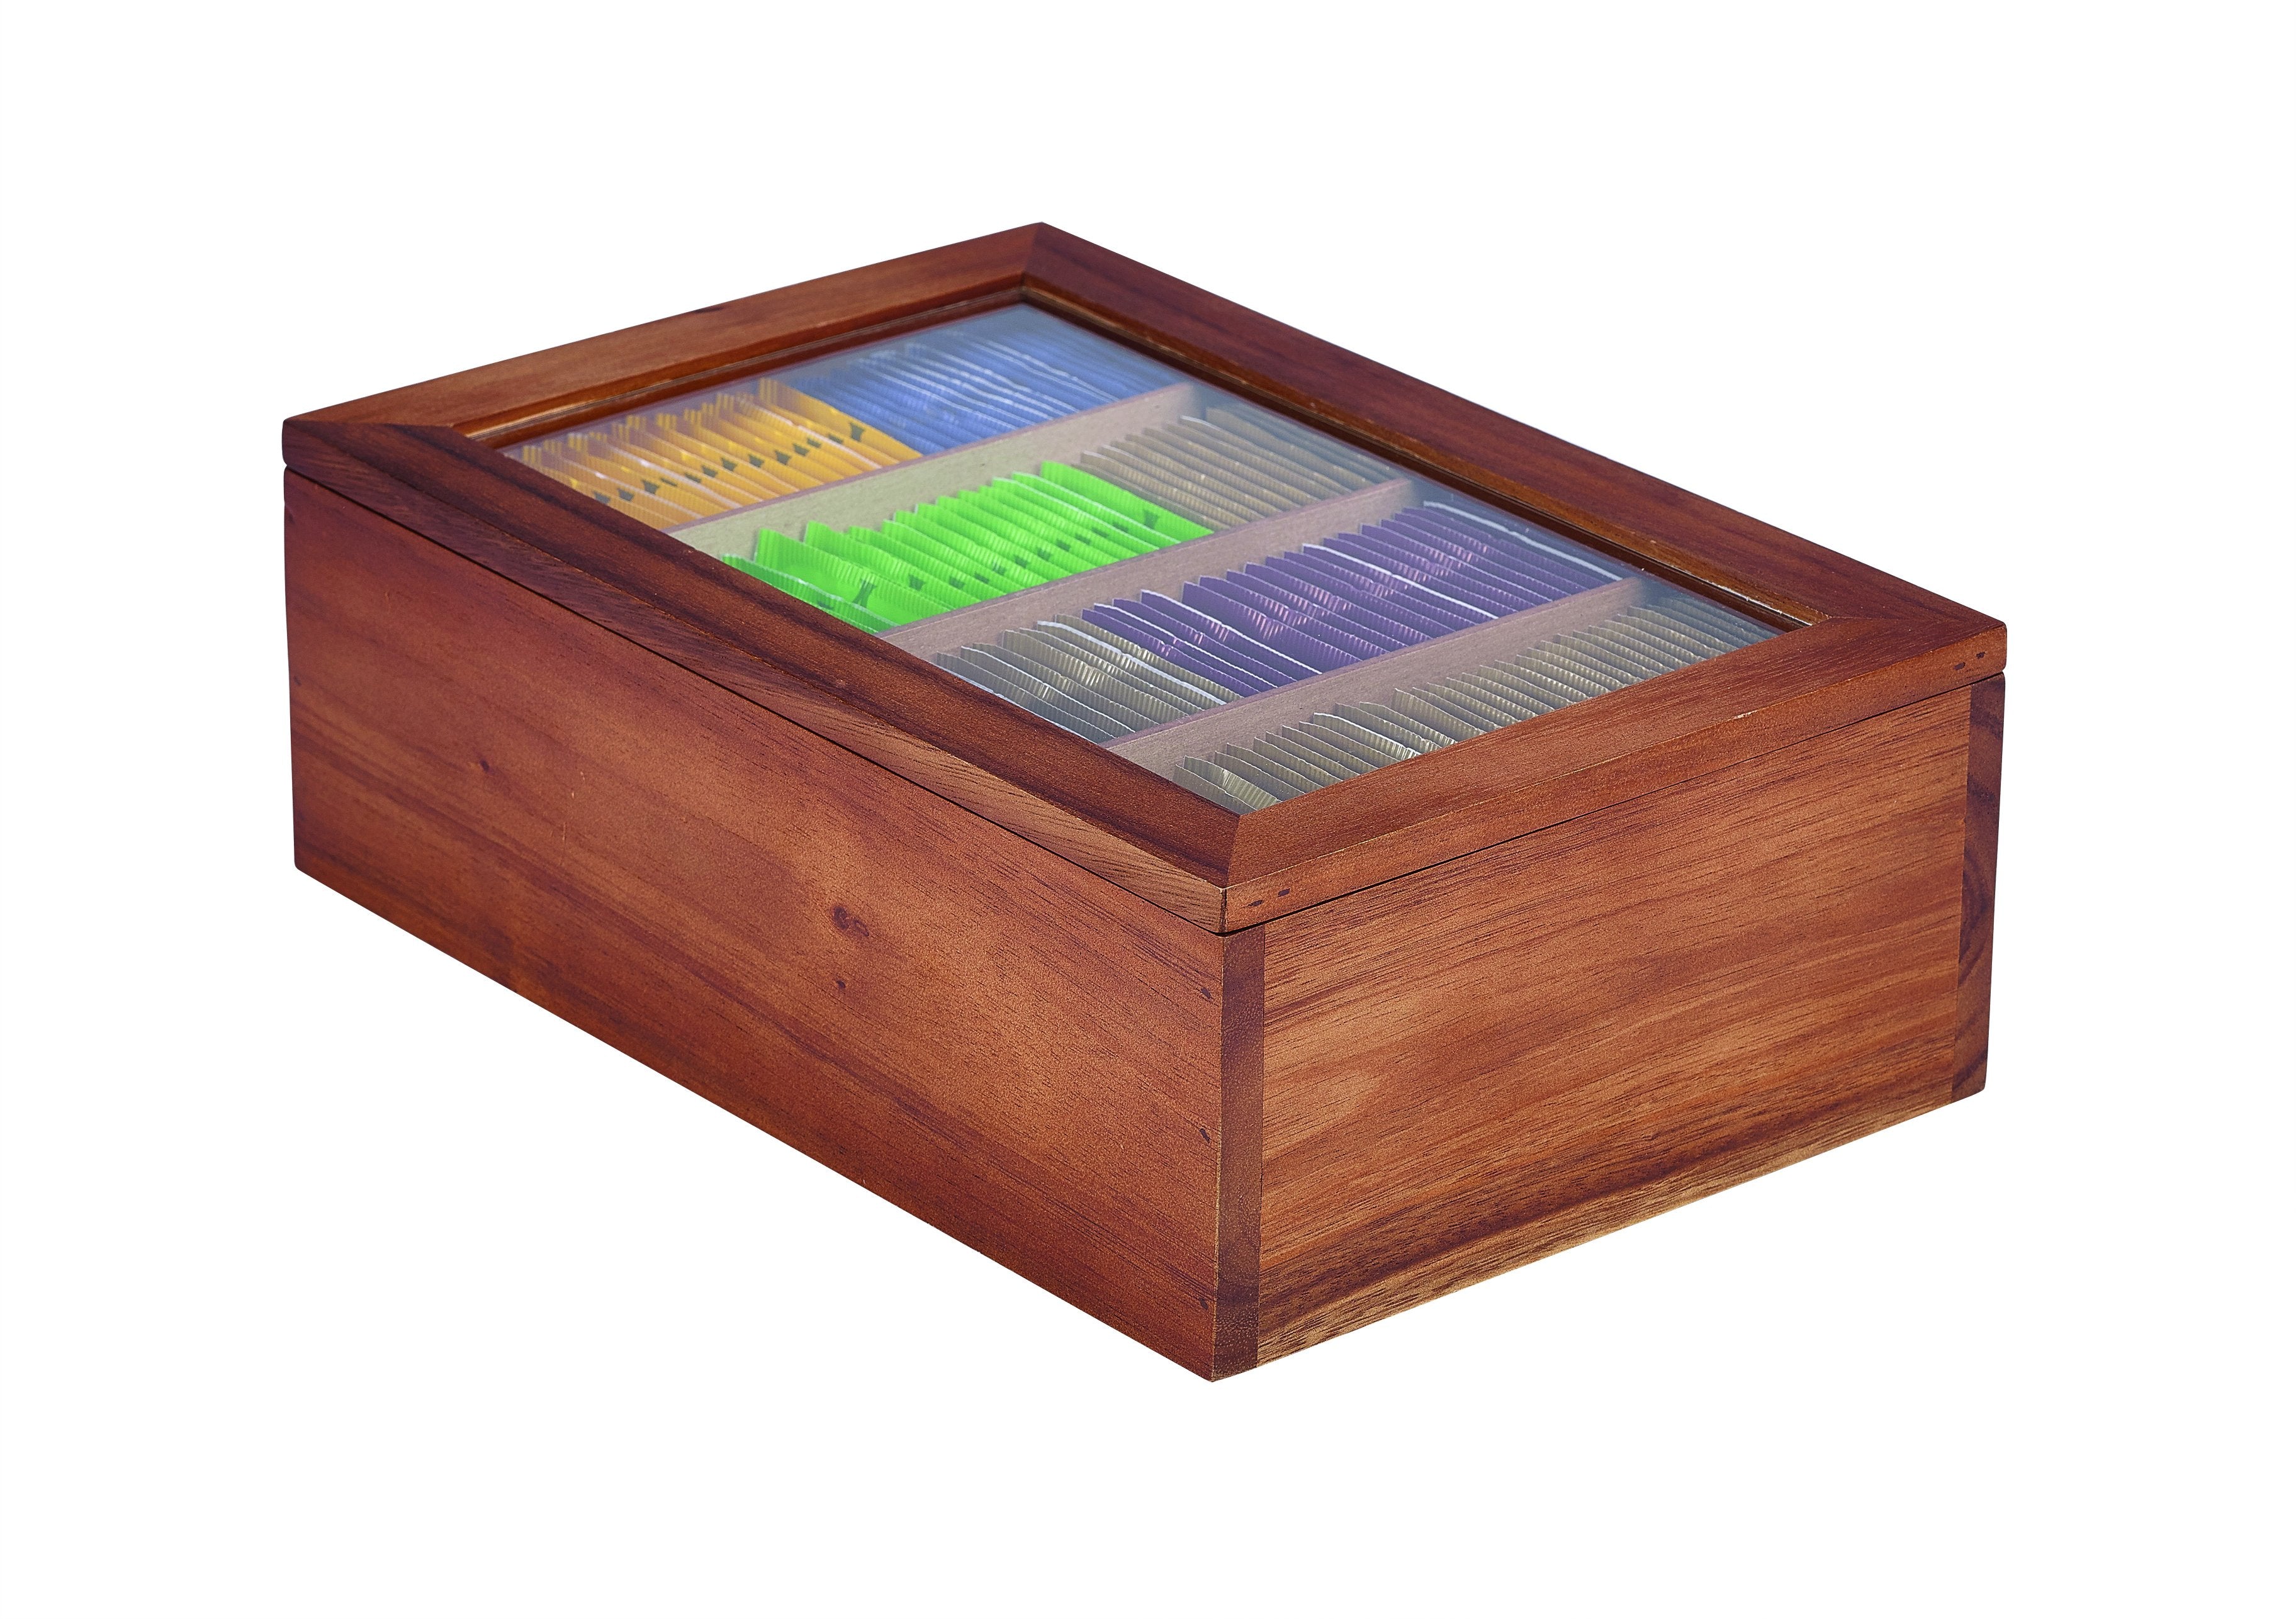 Acacia Wood Tea Box 30X20X10cm